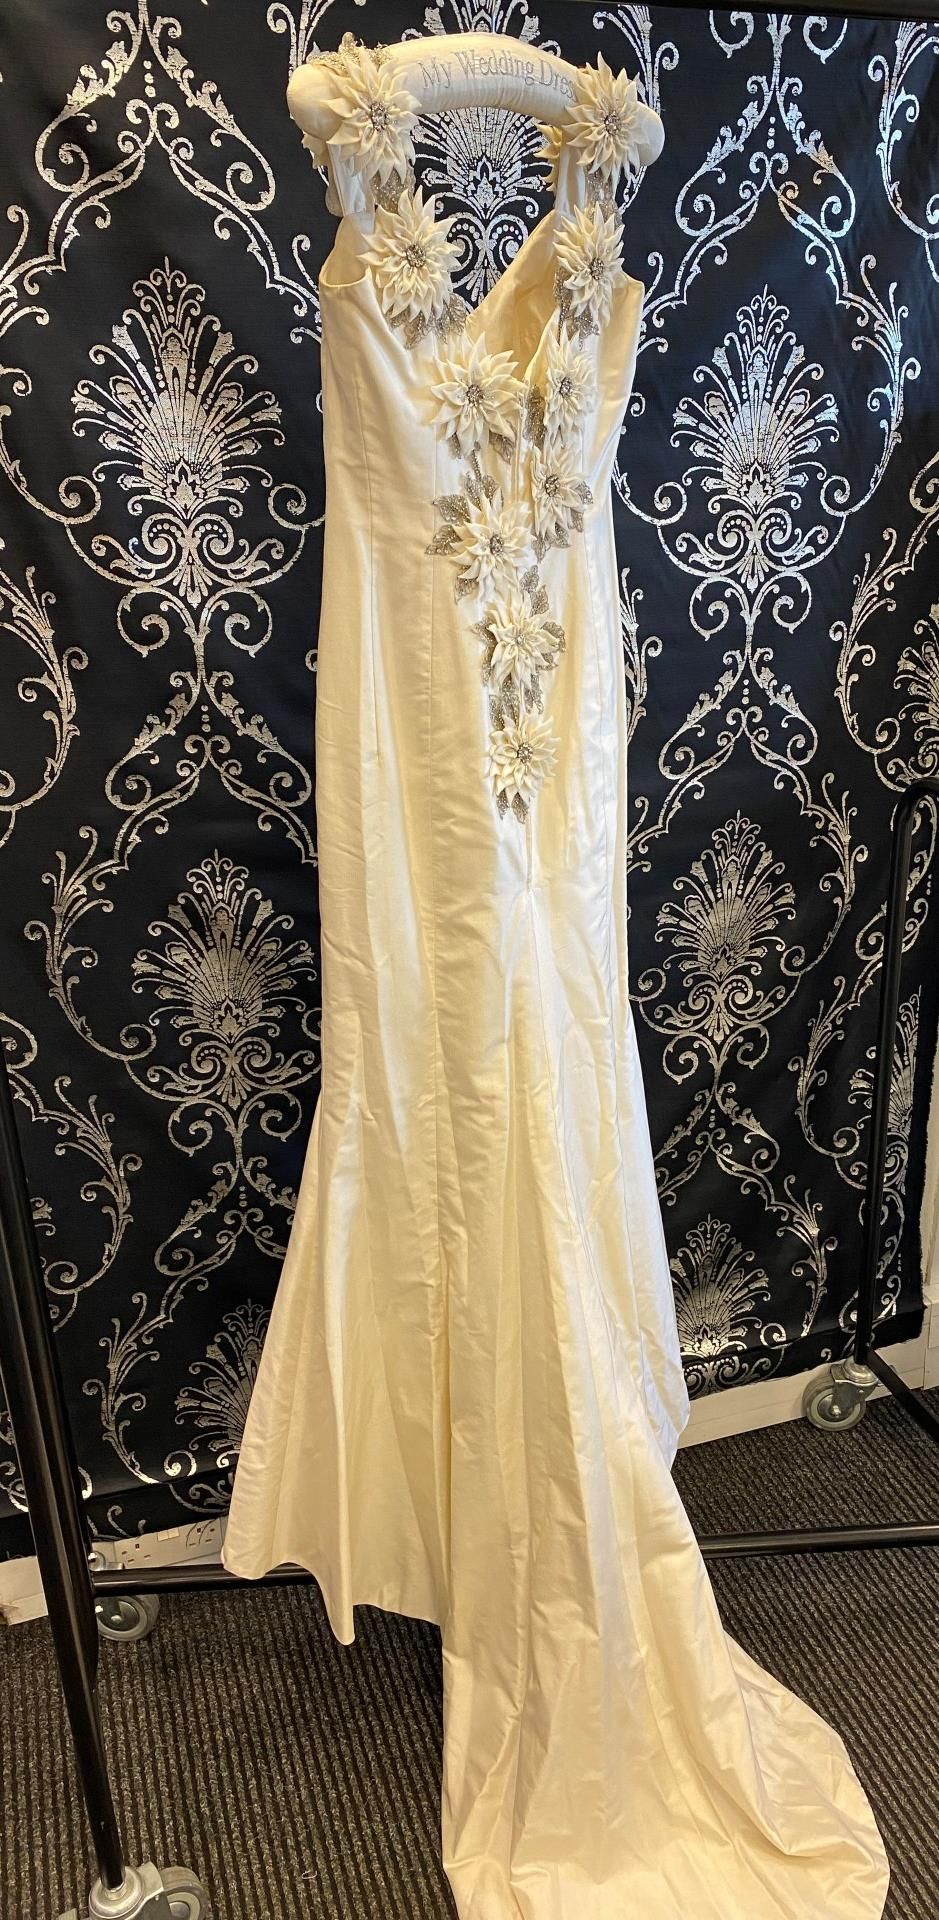 1 x ALAN HANNAH 'Electra' Stunning Fishtail Designer Wedding Dress RRP £2,330 UK 12 - Image 4 of 11